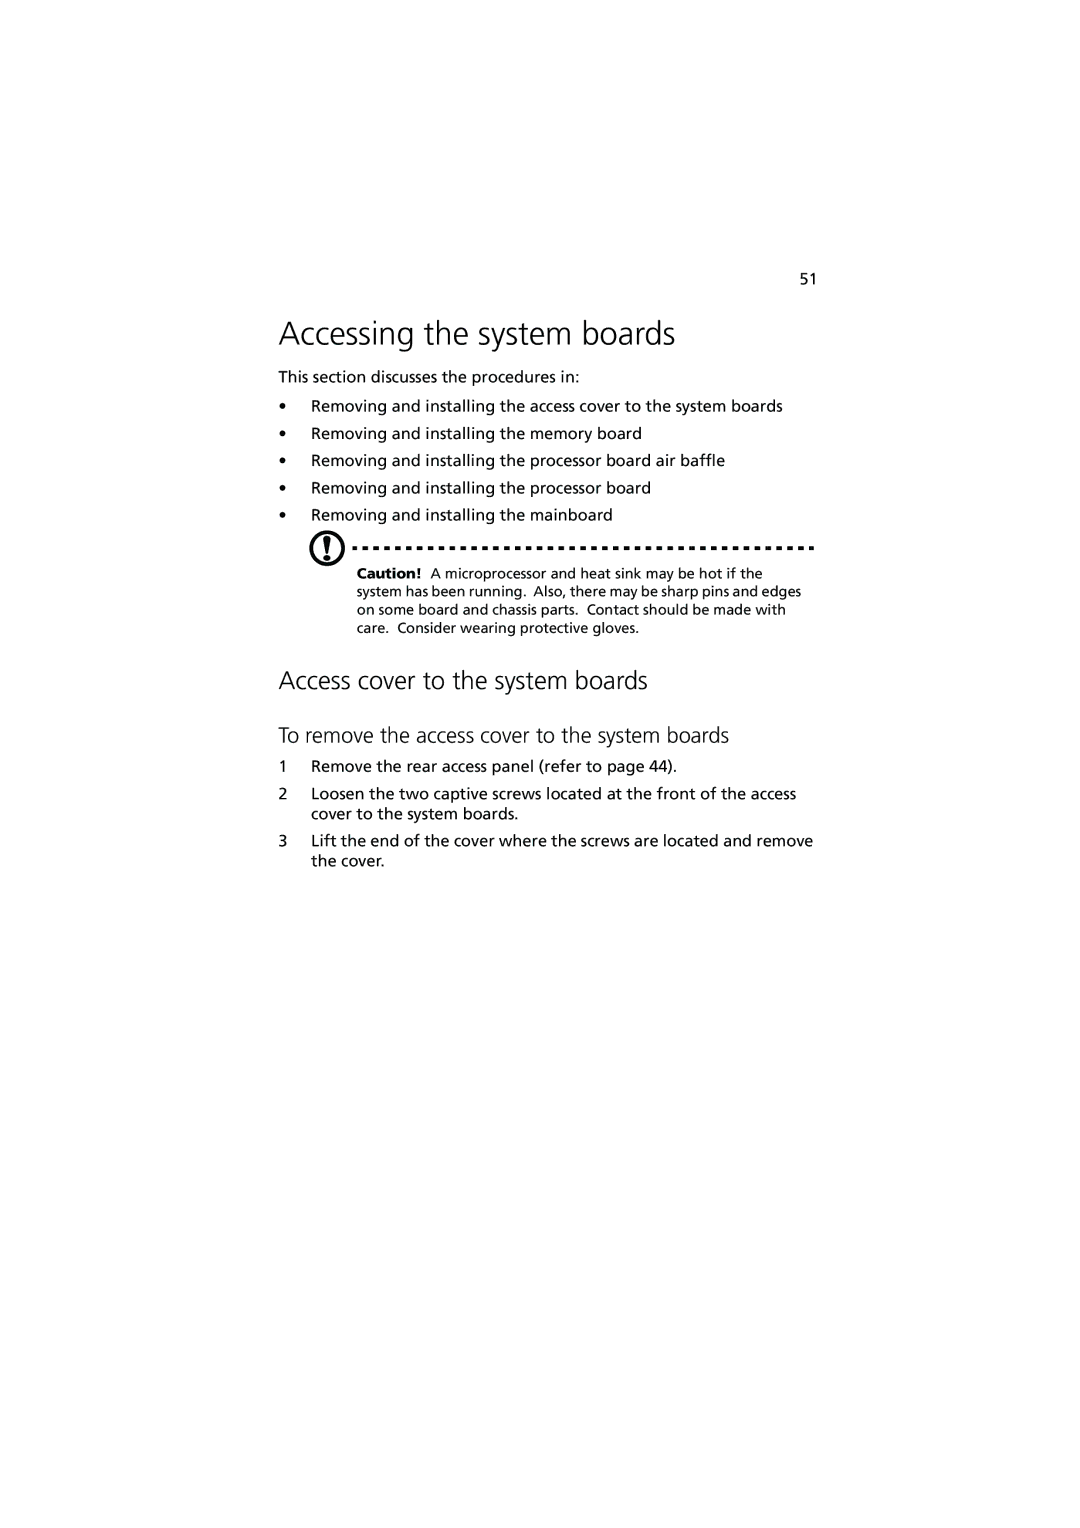 Acer Altos G900 manual Accessing the system boards, Access cover to the system boards 